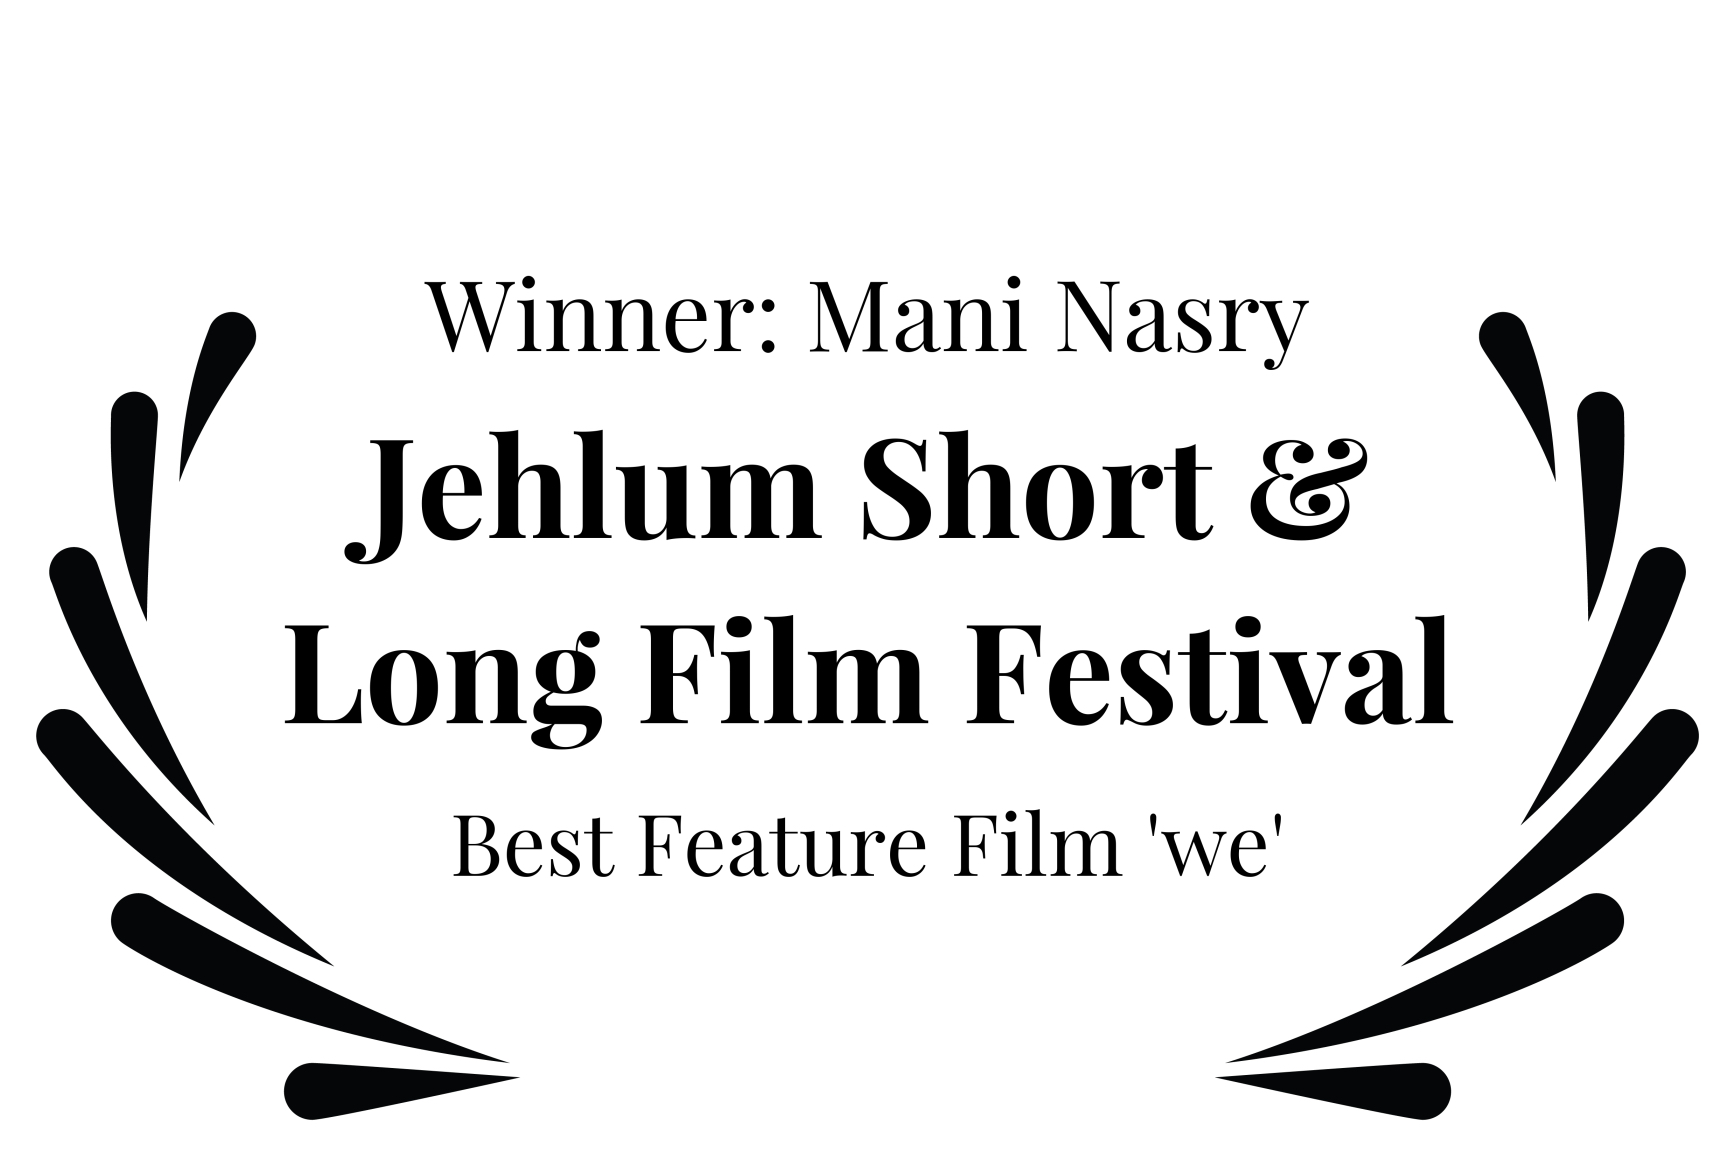 Winner Mani Nasry - Jehlum Short Long Film Festival - Best Feature Film we